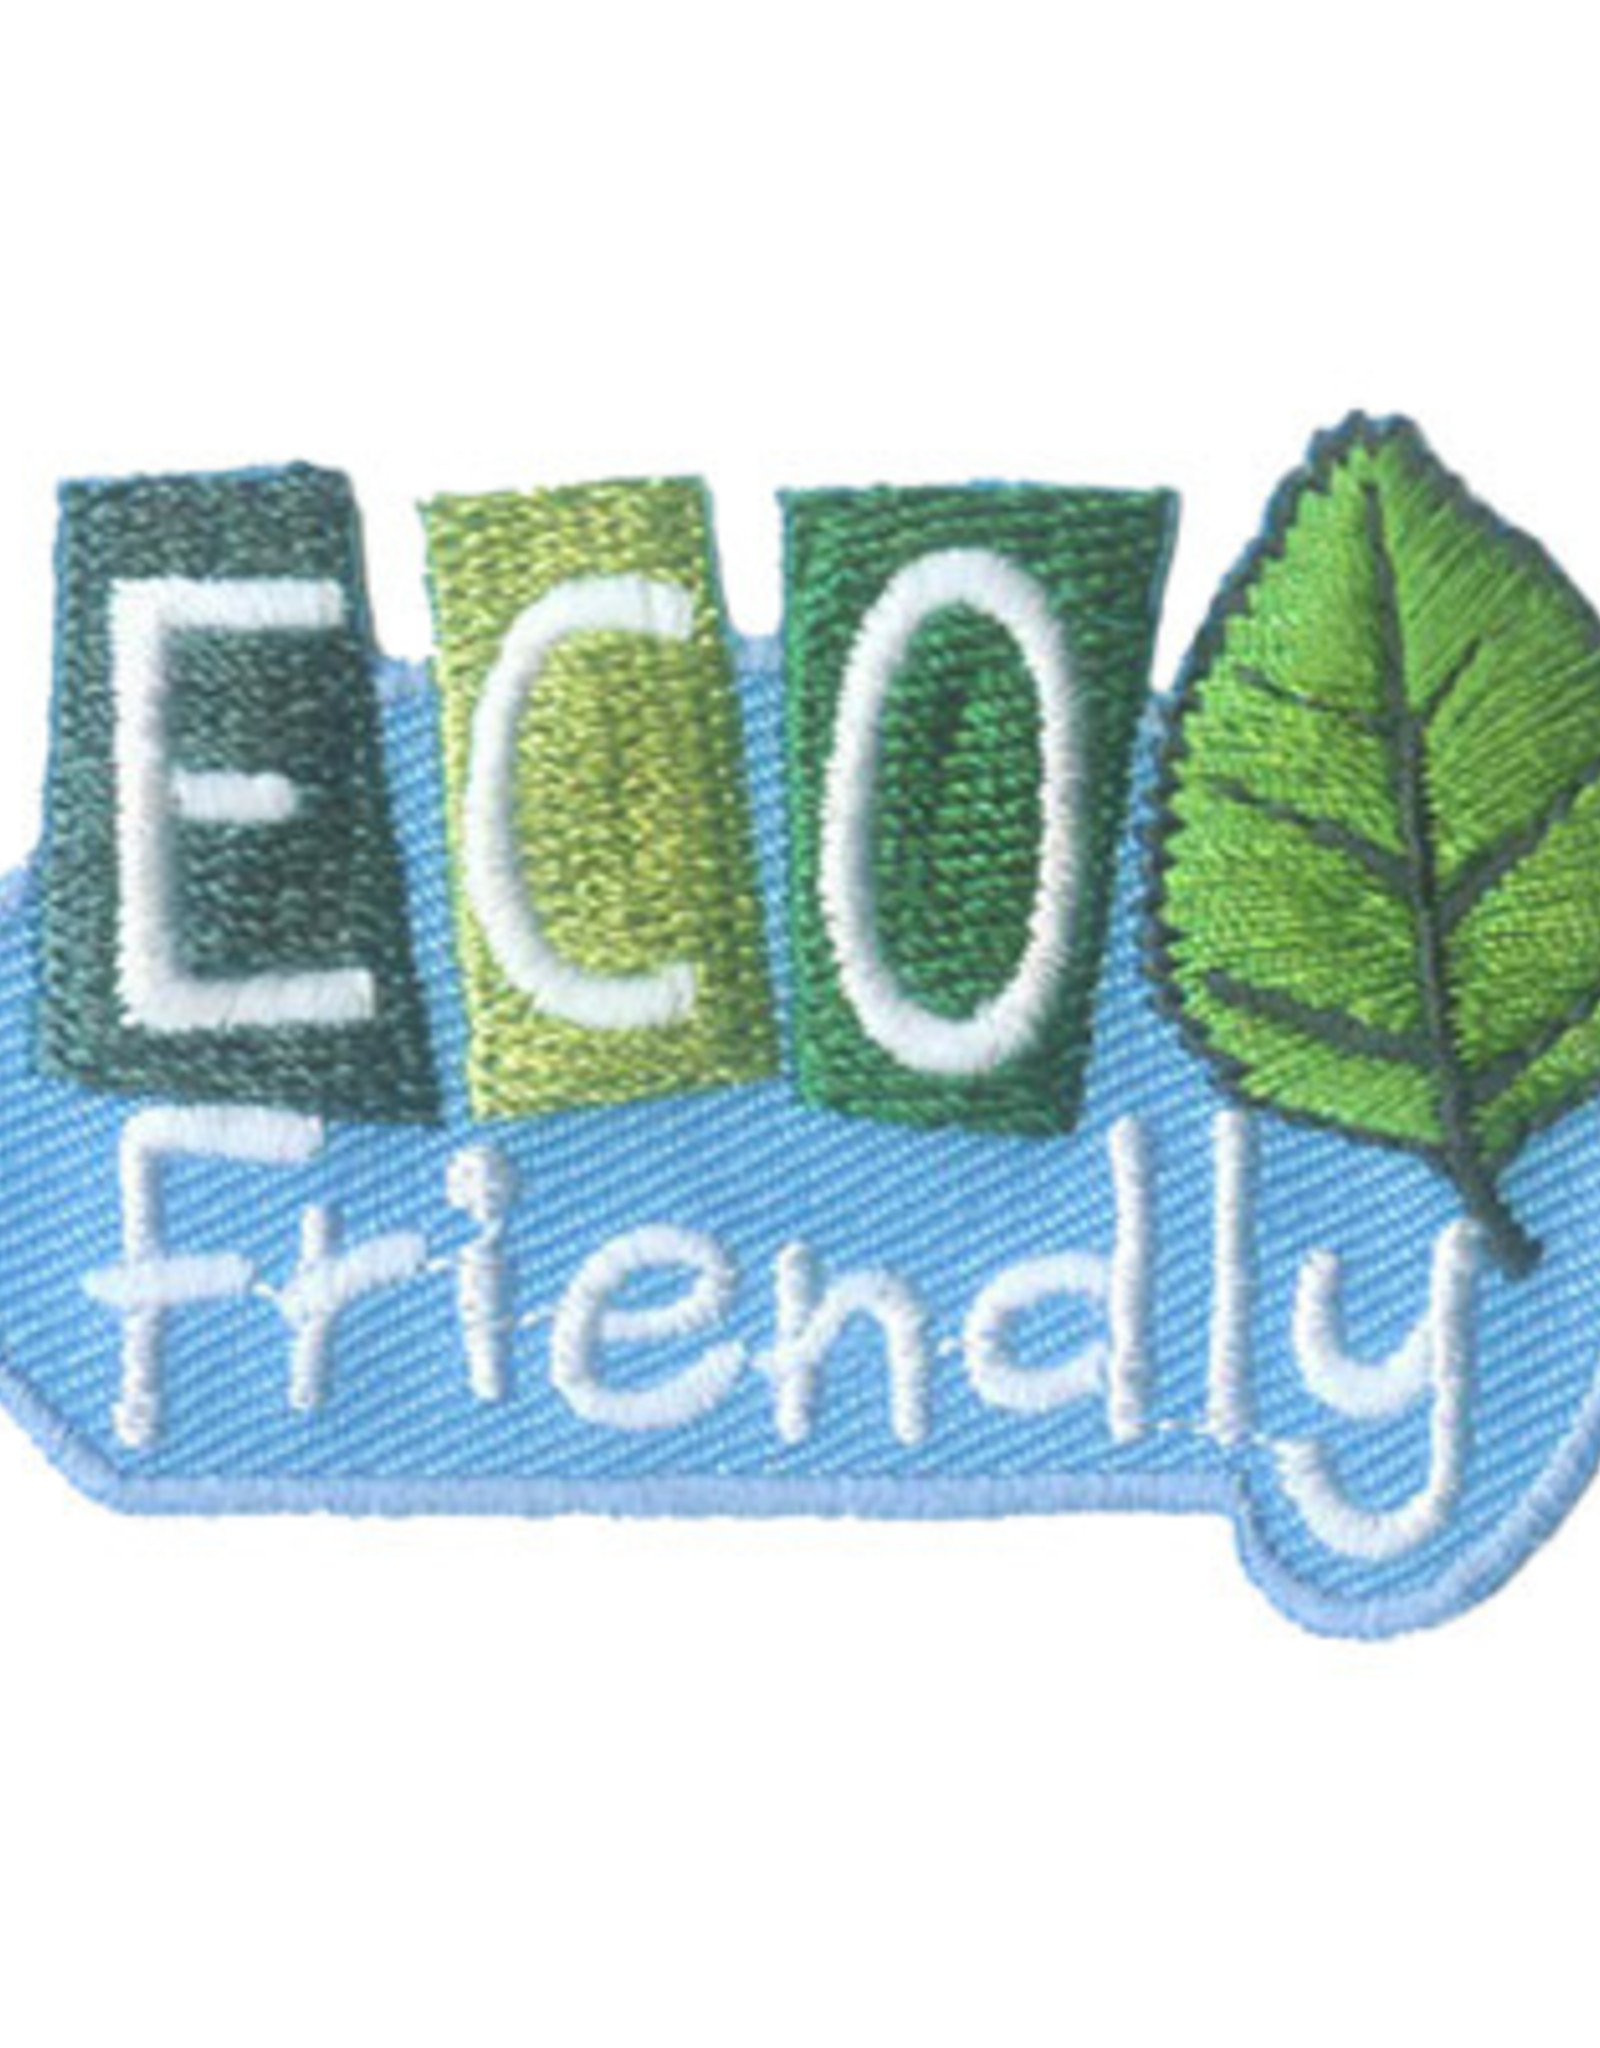 Advantage Emblem & Screen Prnt *Eco Friendly Fun Patch